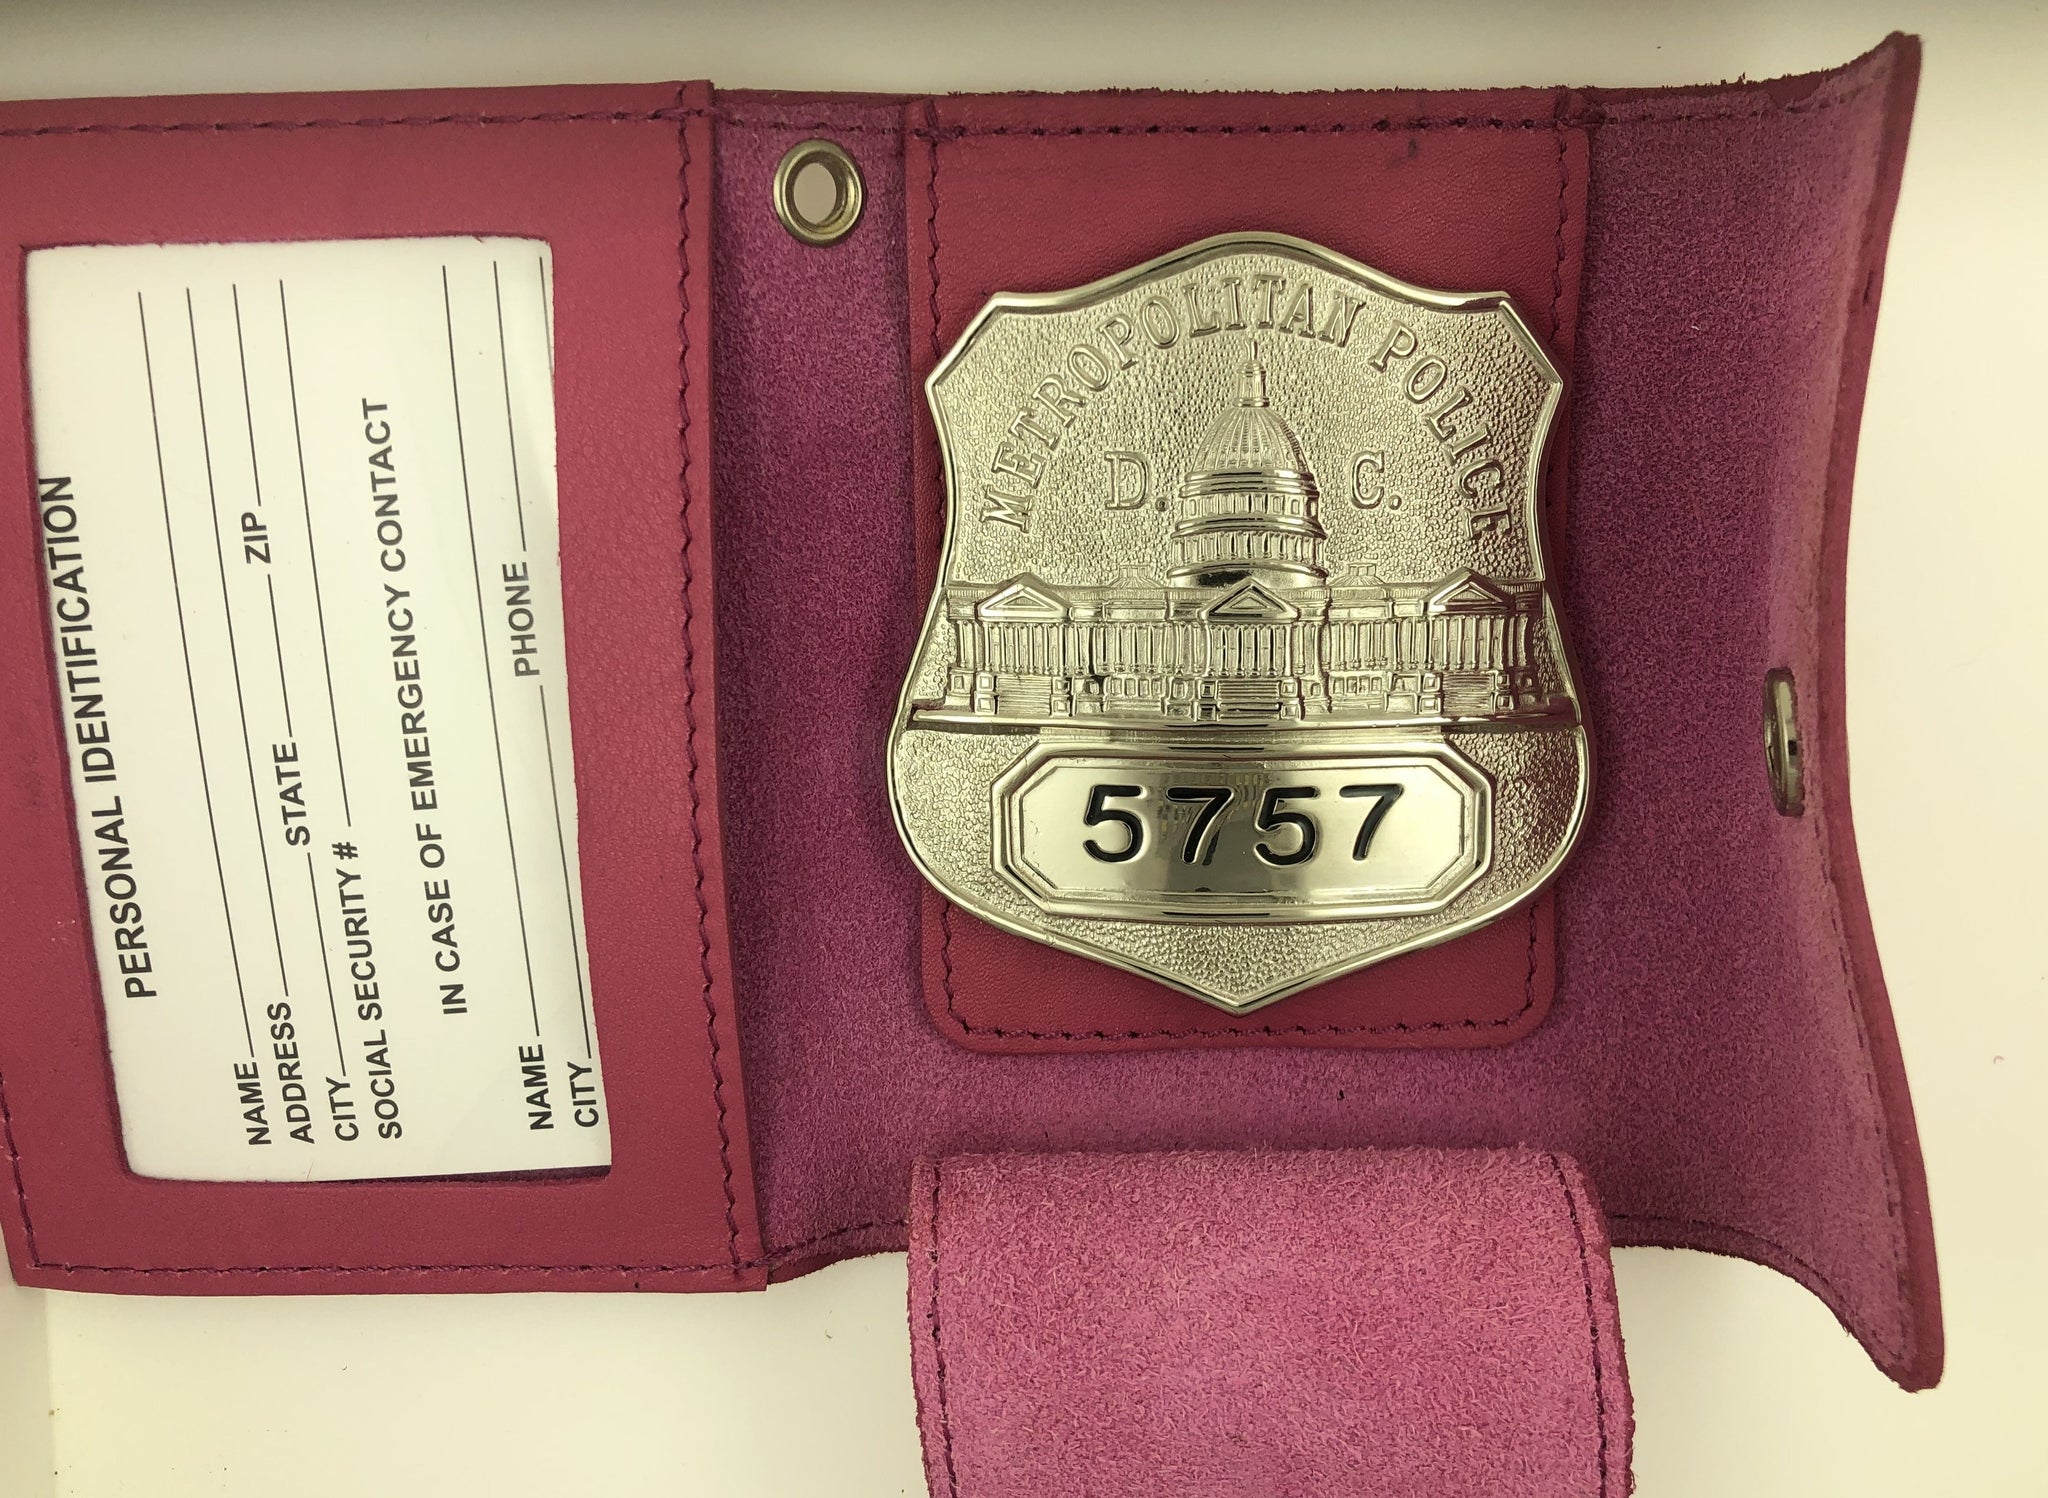 FBI Antique Mini Badge in a Mini Leather Wallet Key Fob was 